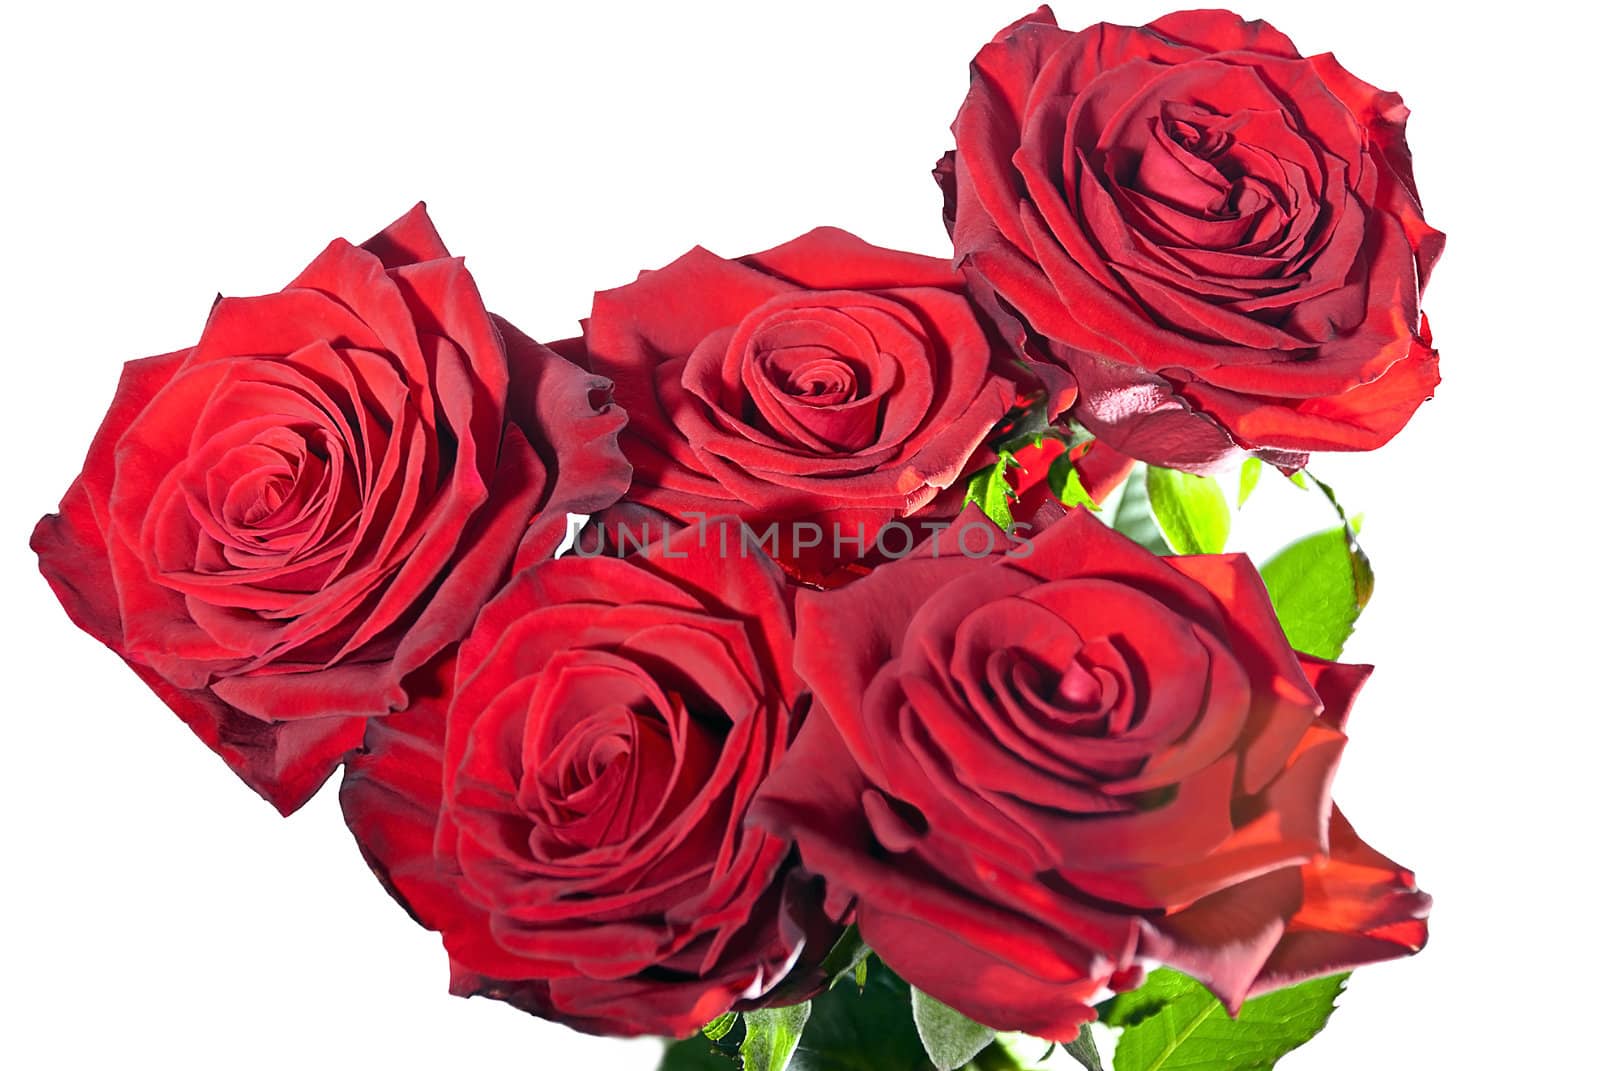 Bouquet roses by negativ